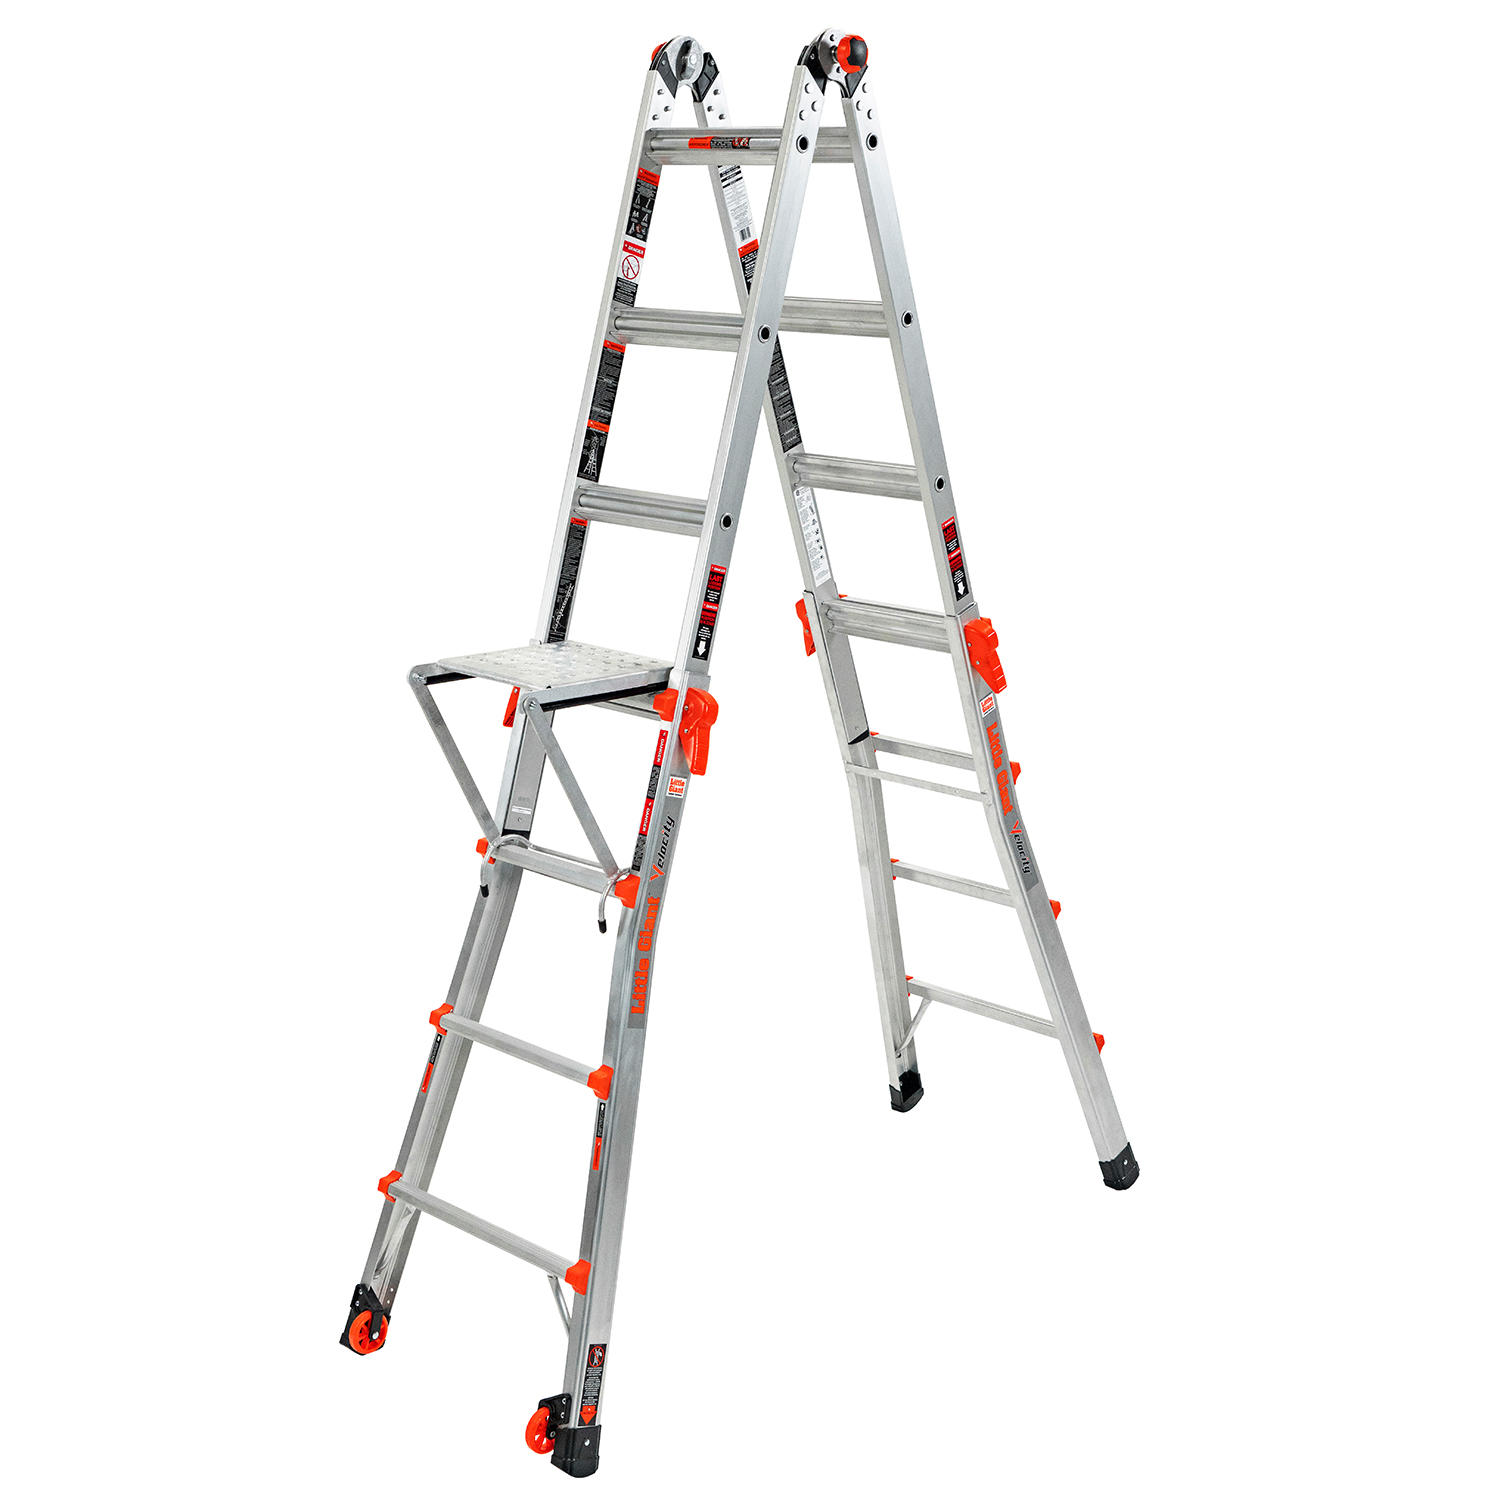 Little Giant Velocity M17 Multi-Use Ladder with Work Platform